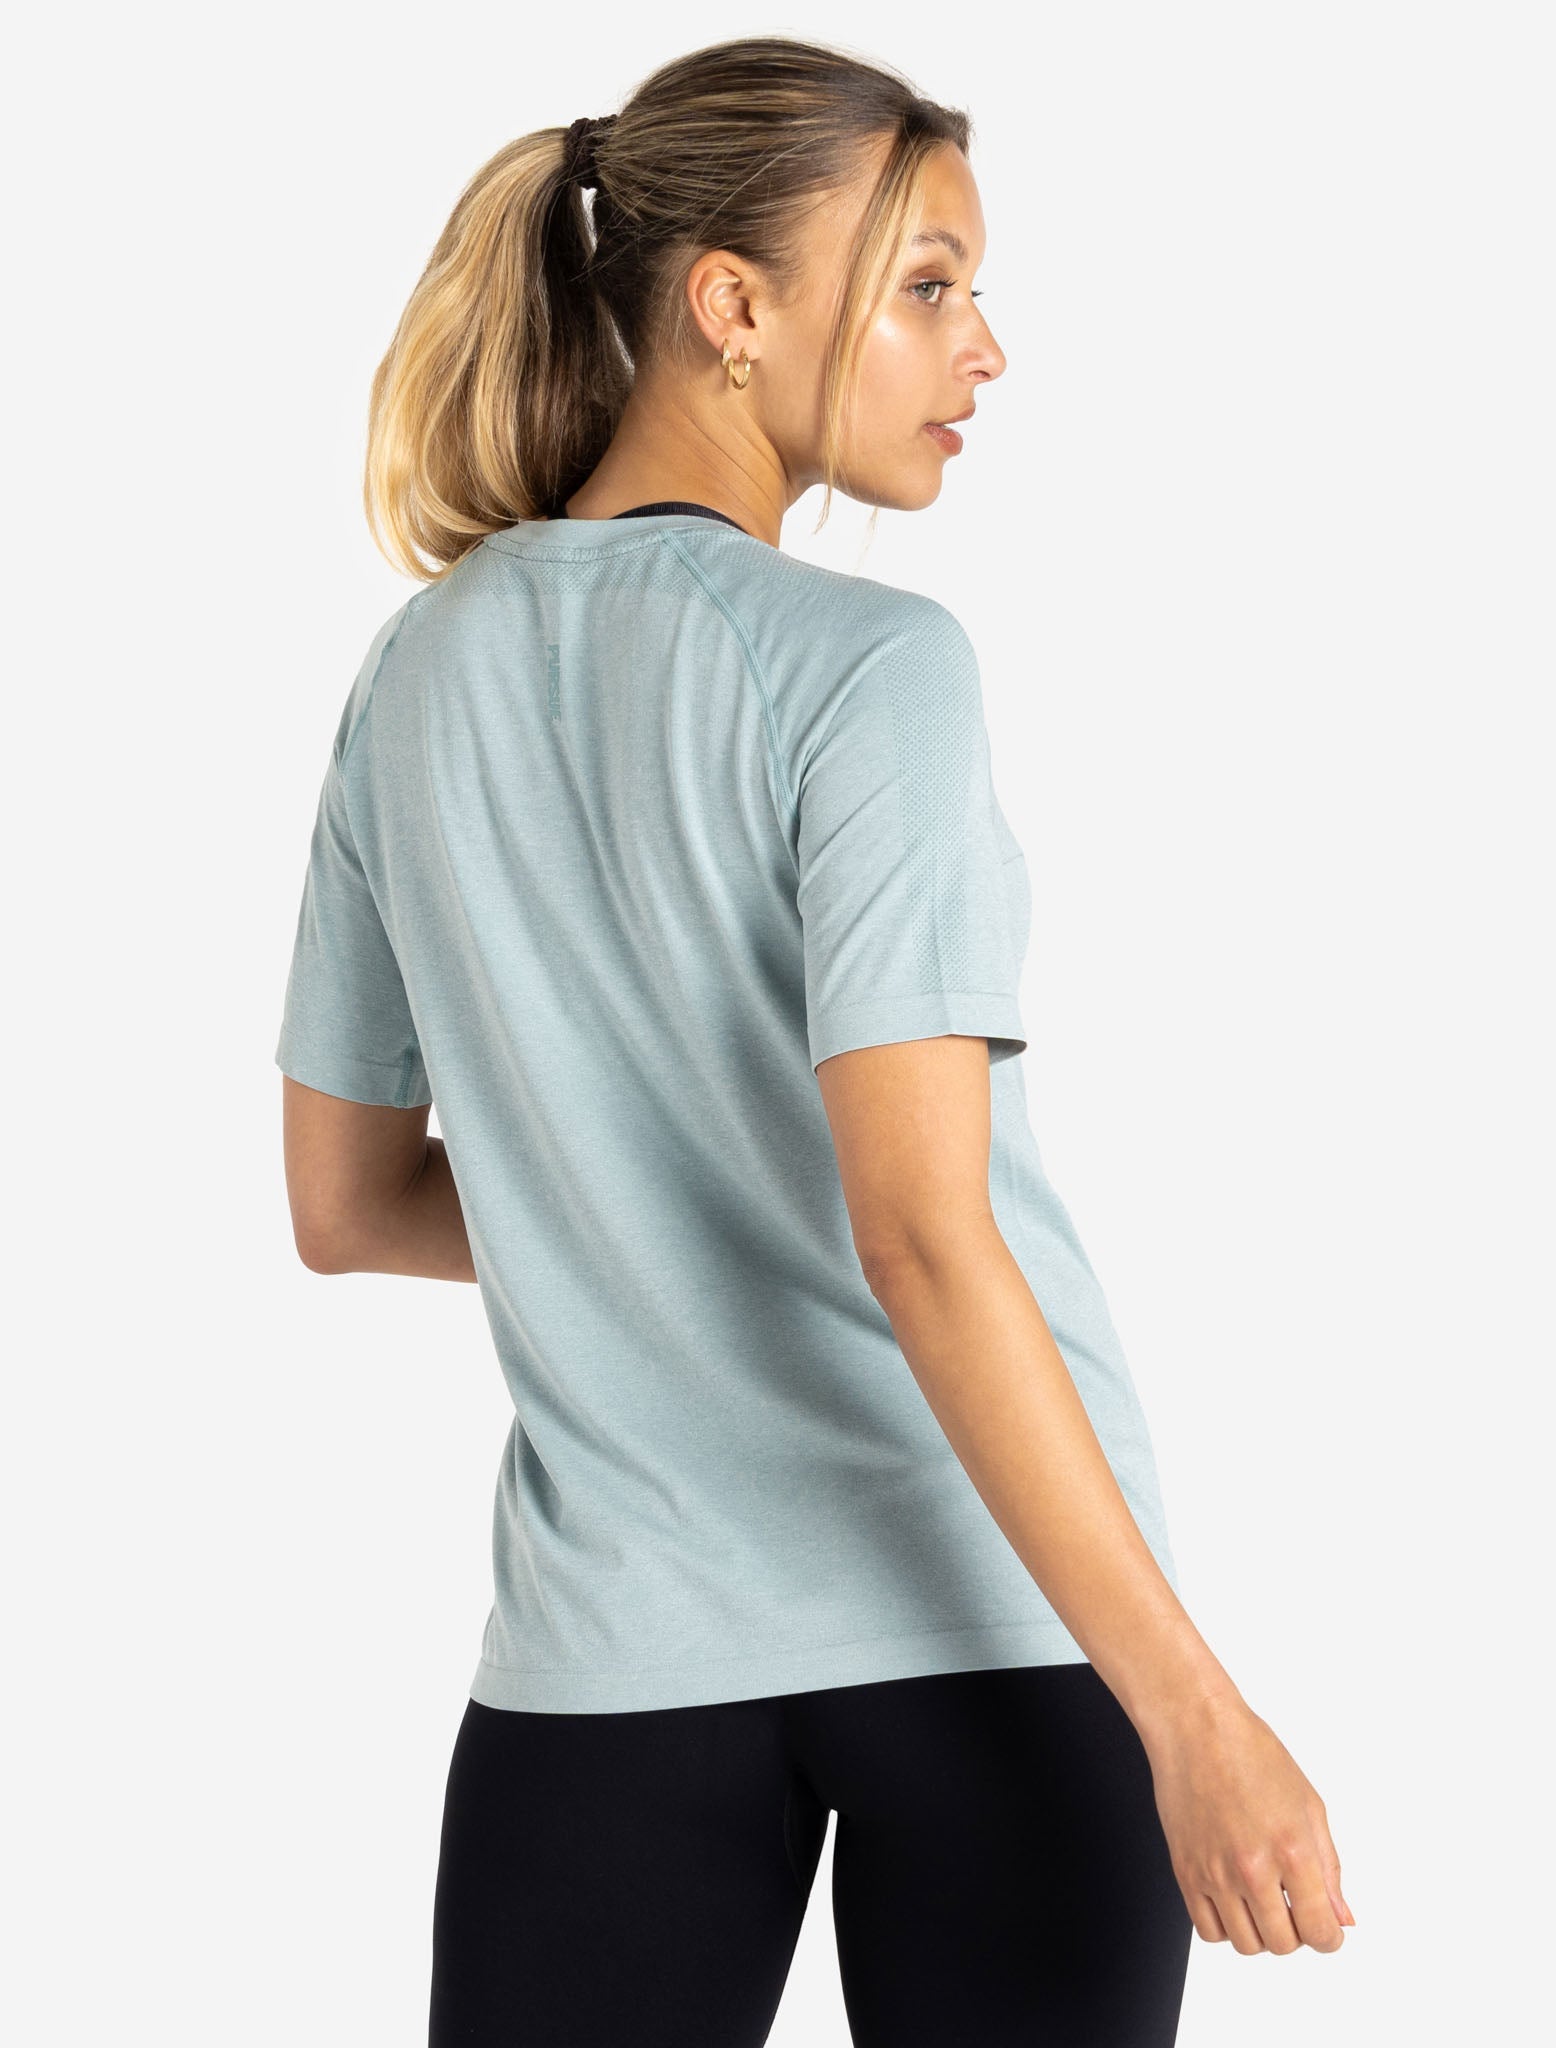 Seamless T-Shirt / Seafoam Green Marl Pursue Fitness 4